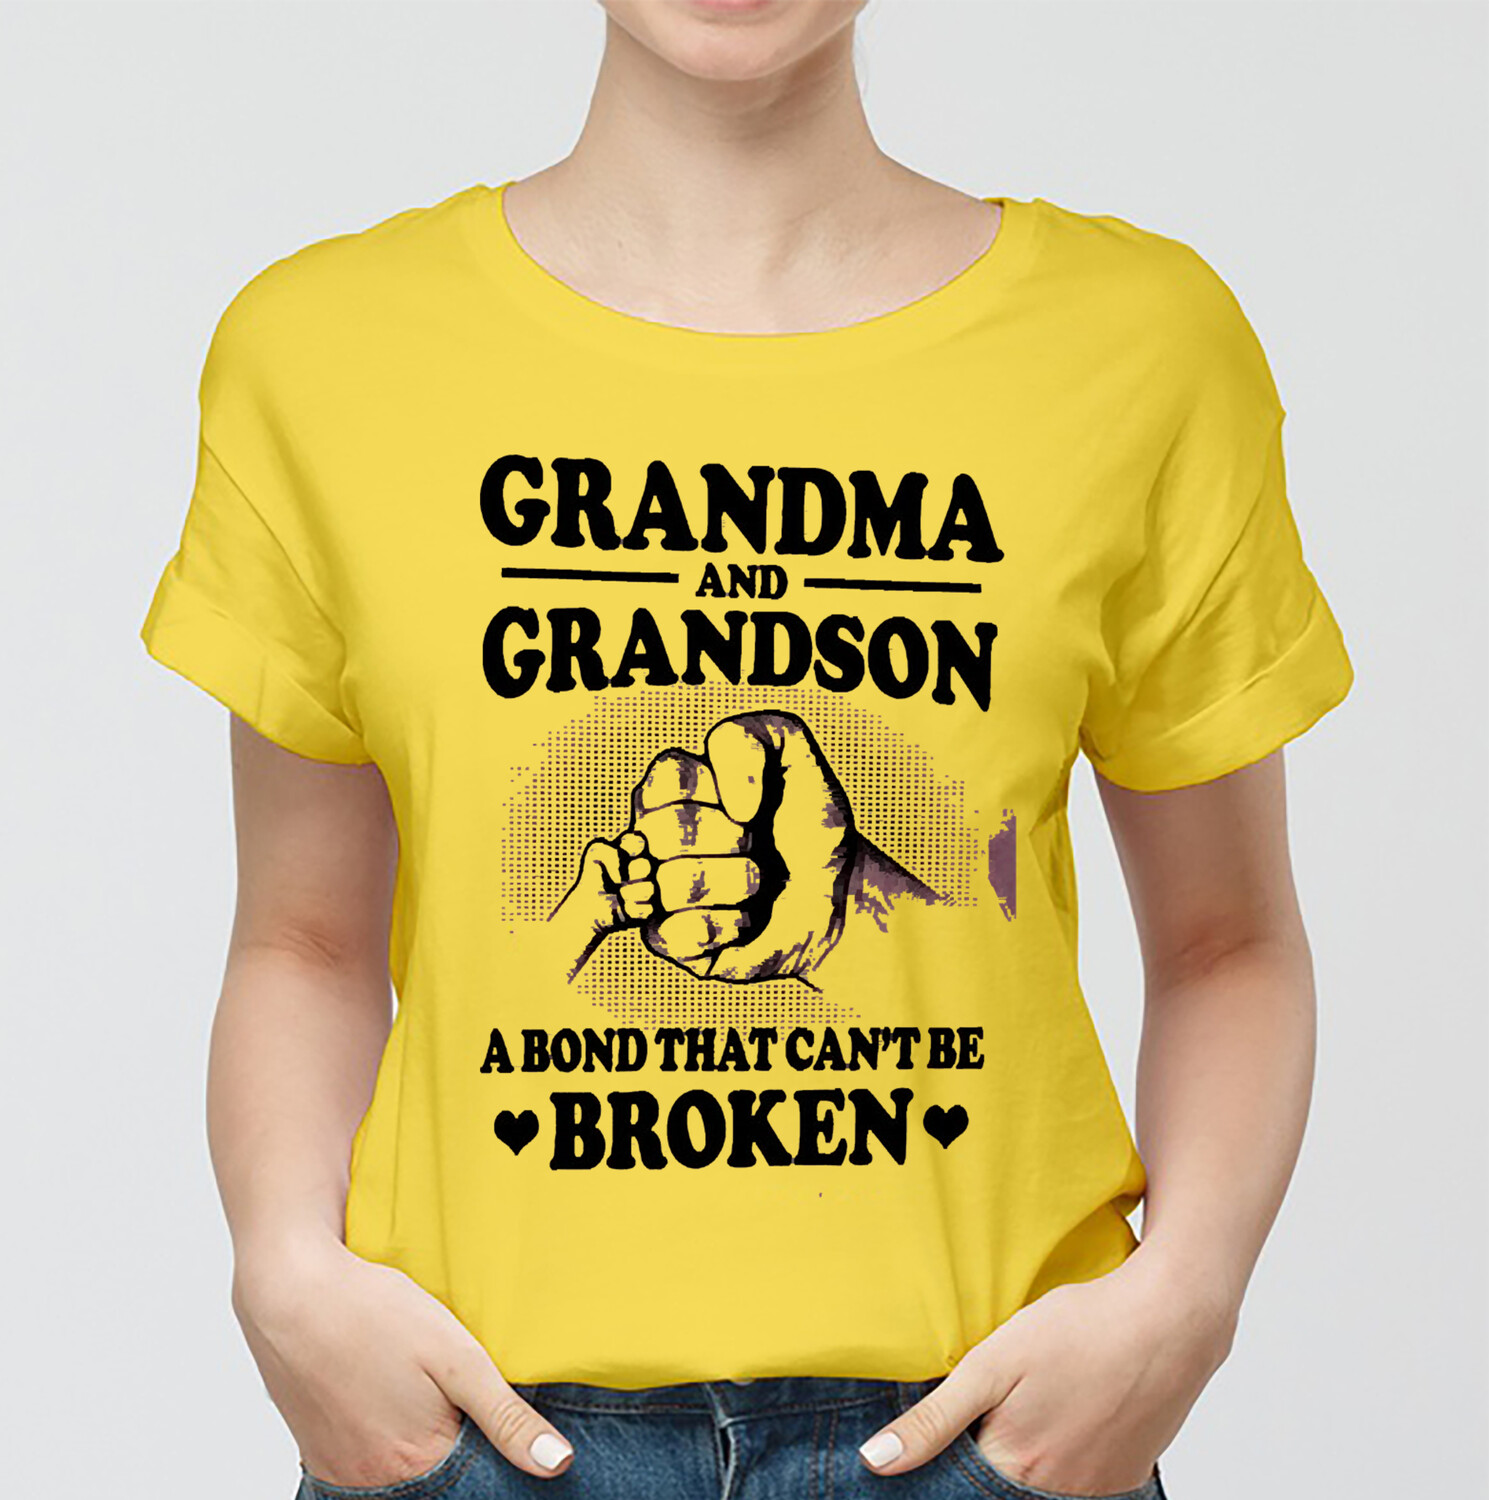 Grandma And Me Shirts - Happiness Is Being, Having A Grandma - Matching Outfits - Grandma and Baby - New Grandma Gift